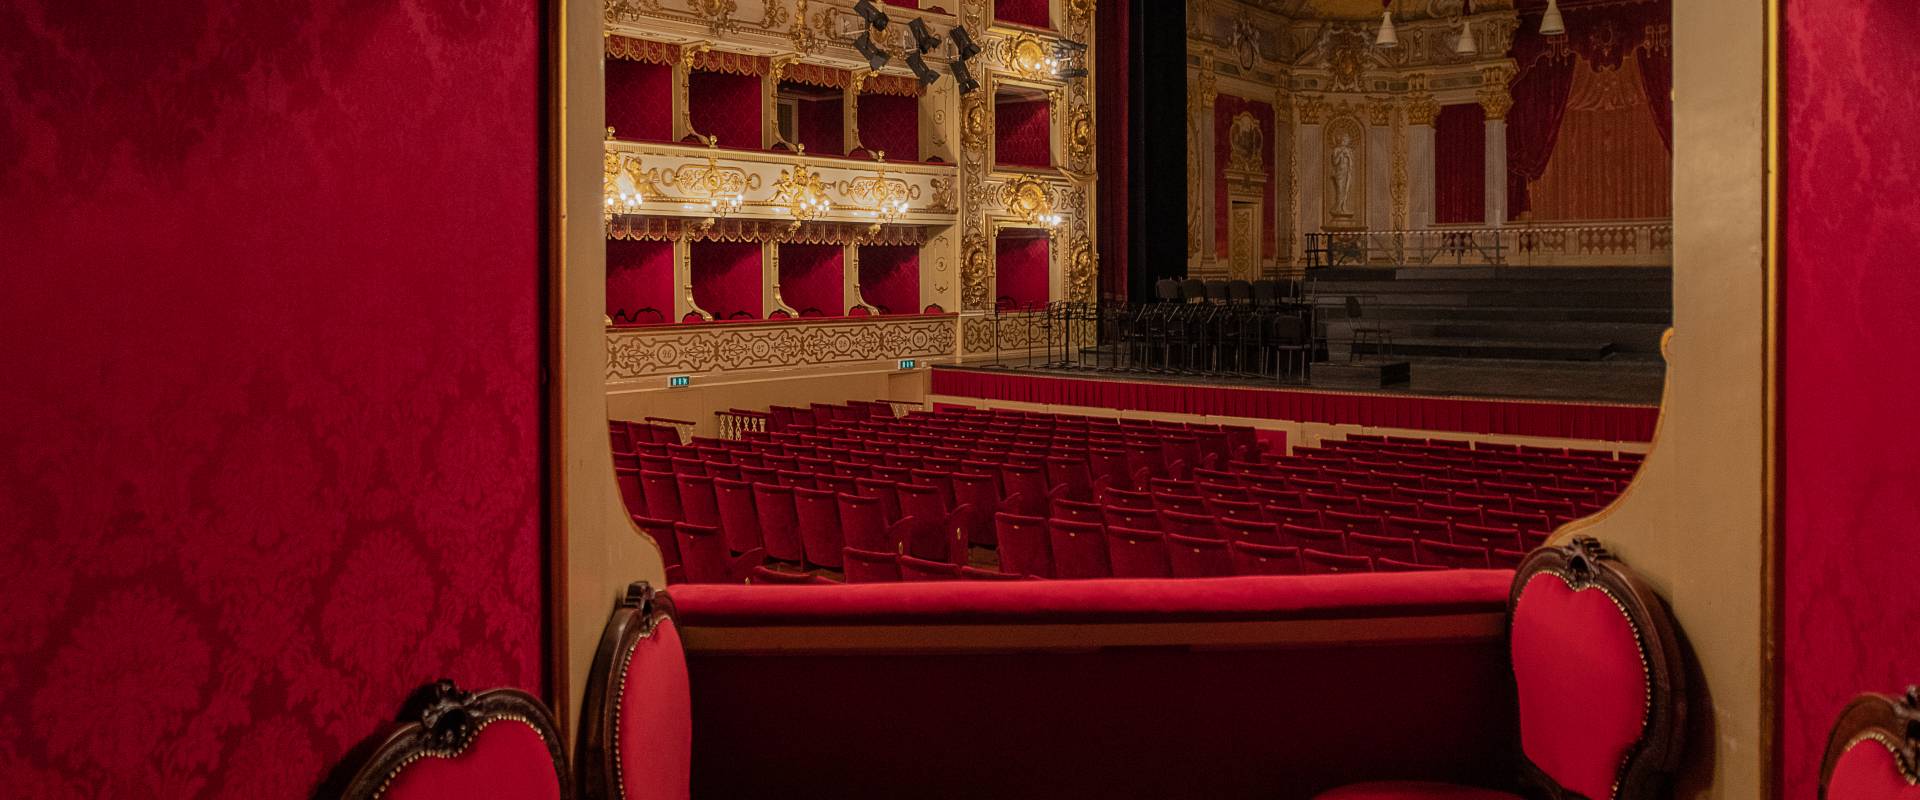 Palco Teatro Regio Parma photo by Maurizio Moro515